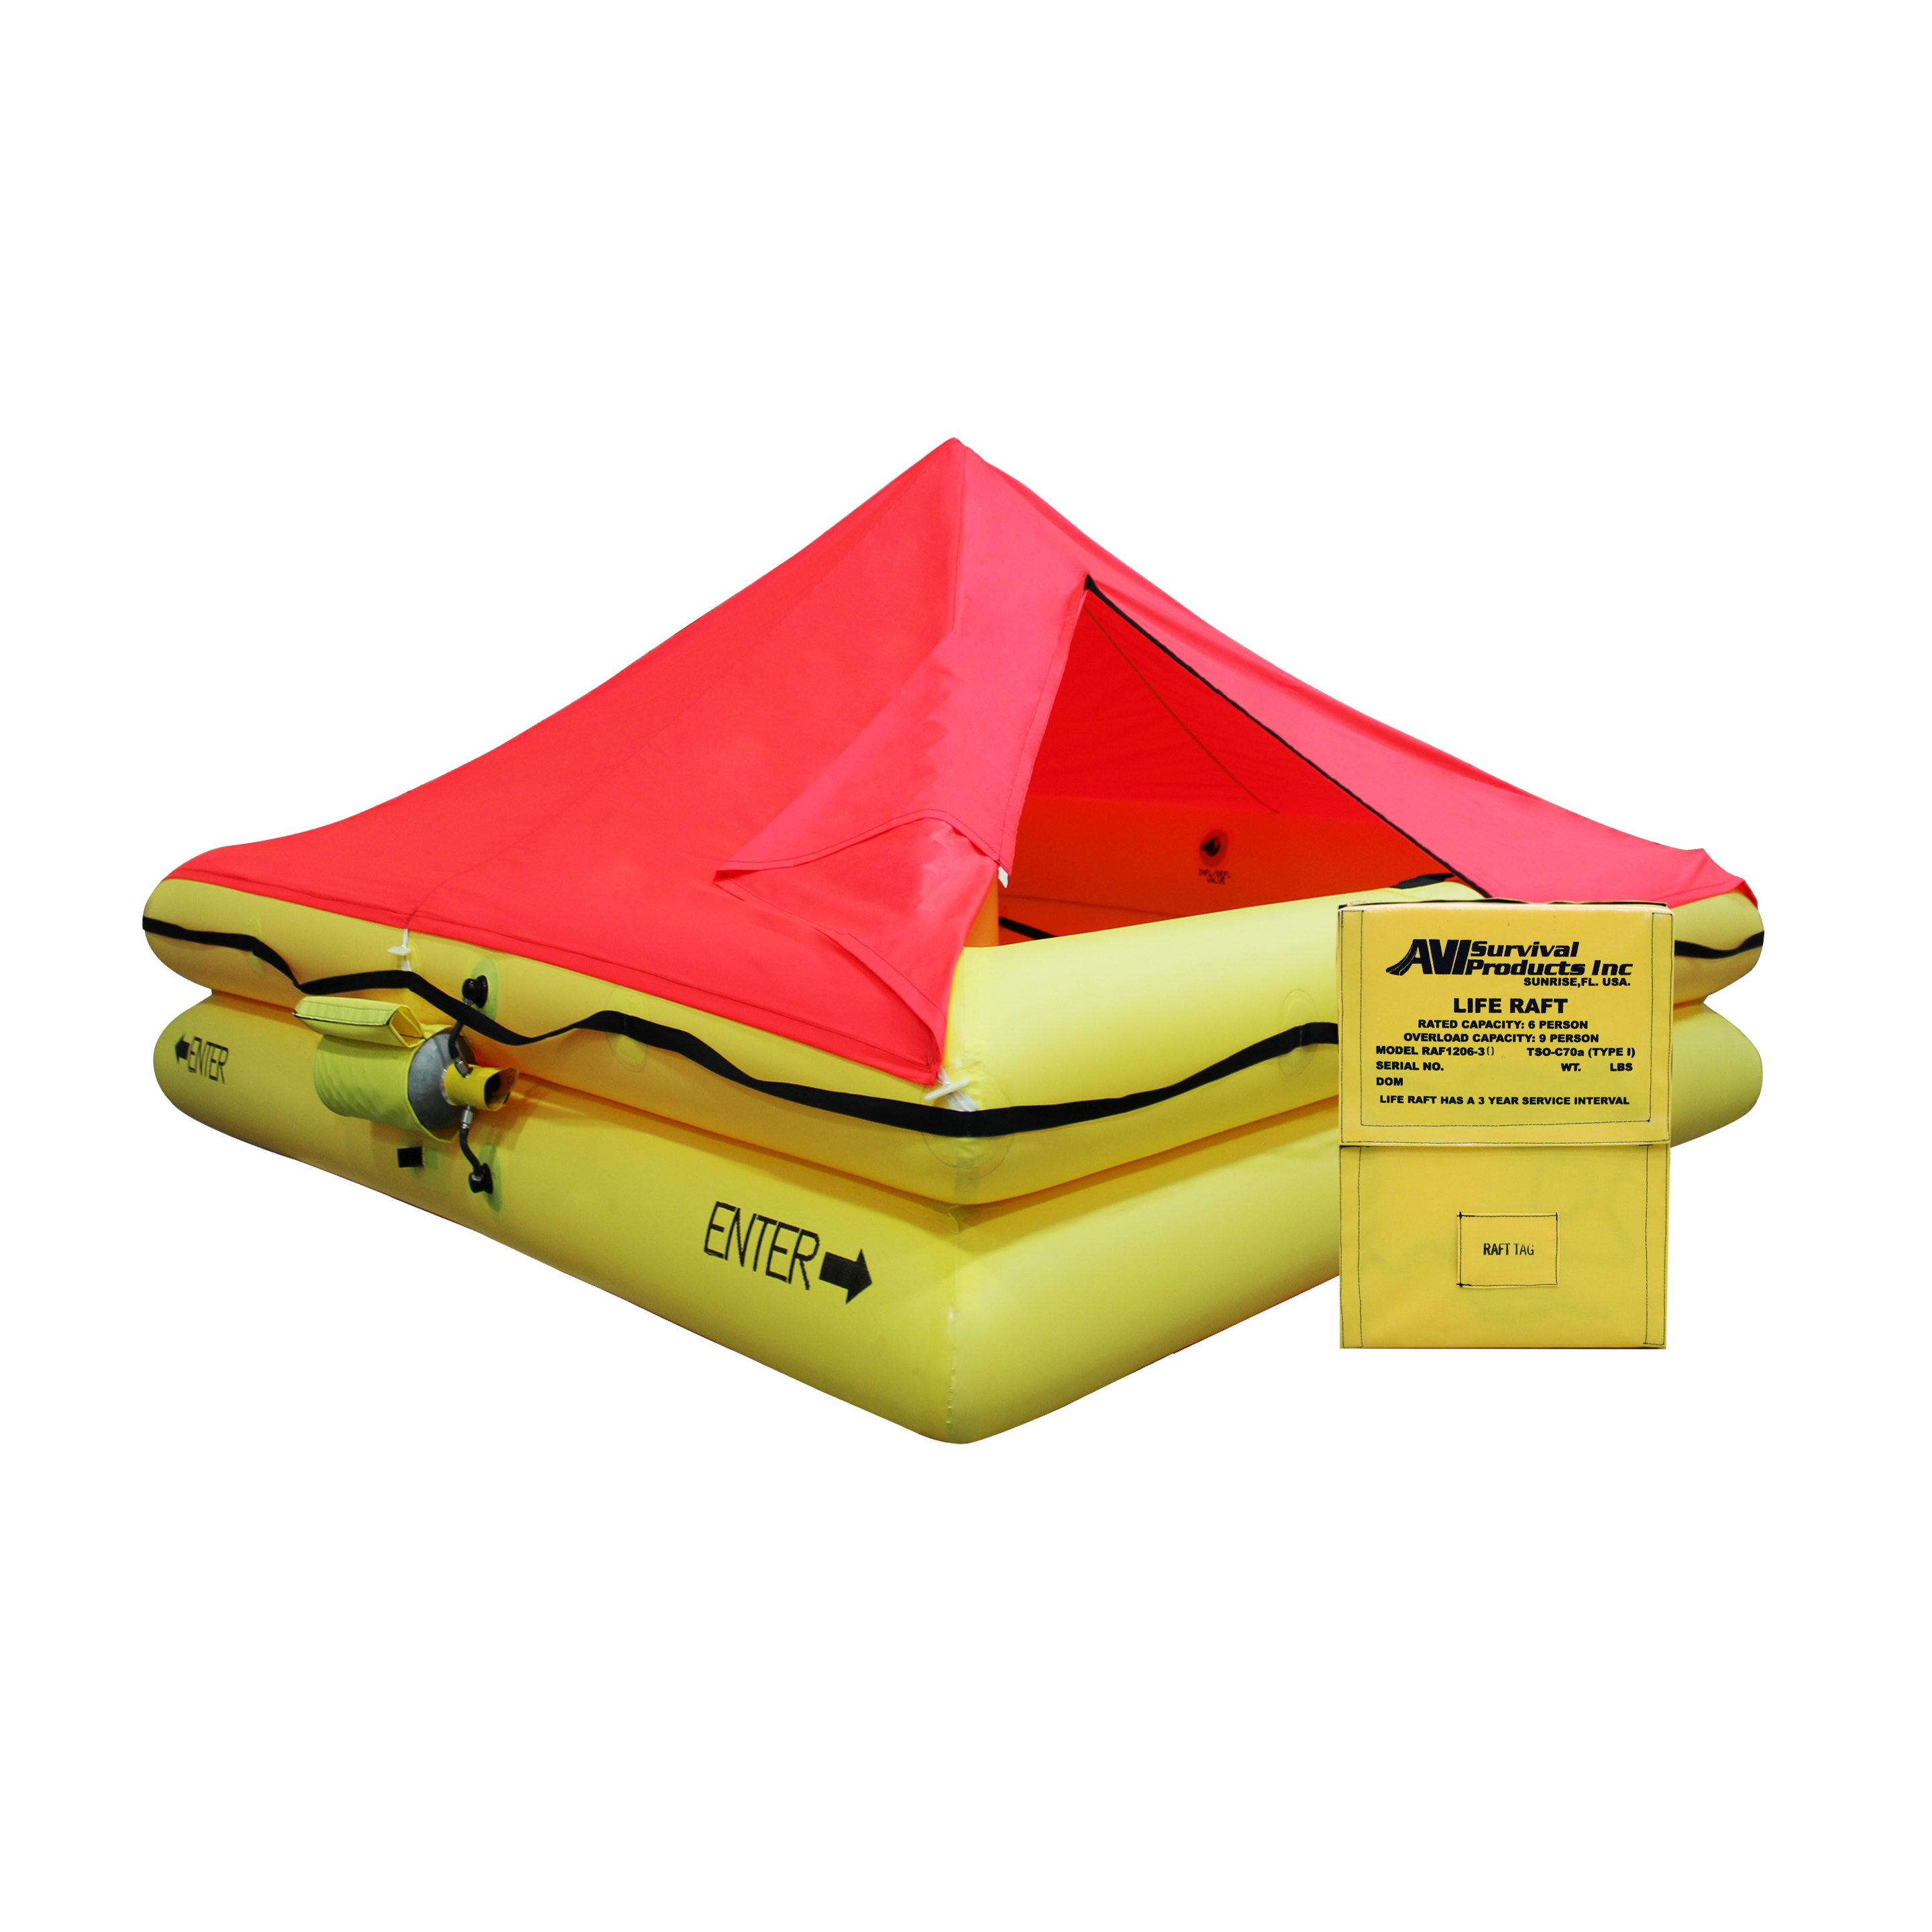 TSO 6 Person Life Raft with FAR 135 Survival Equipment Kit